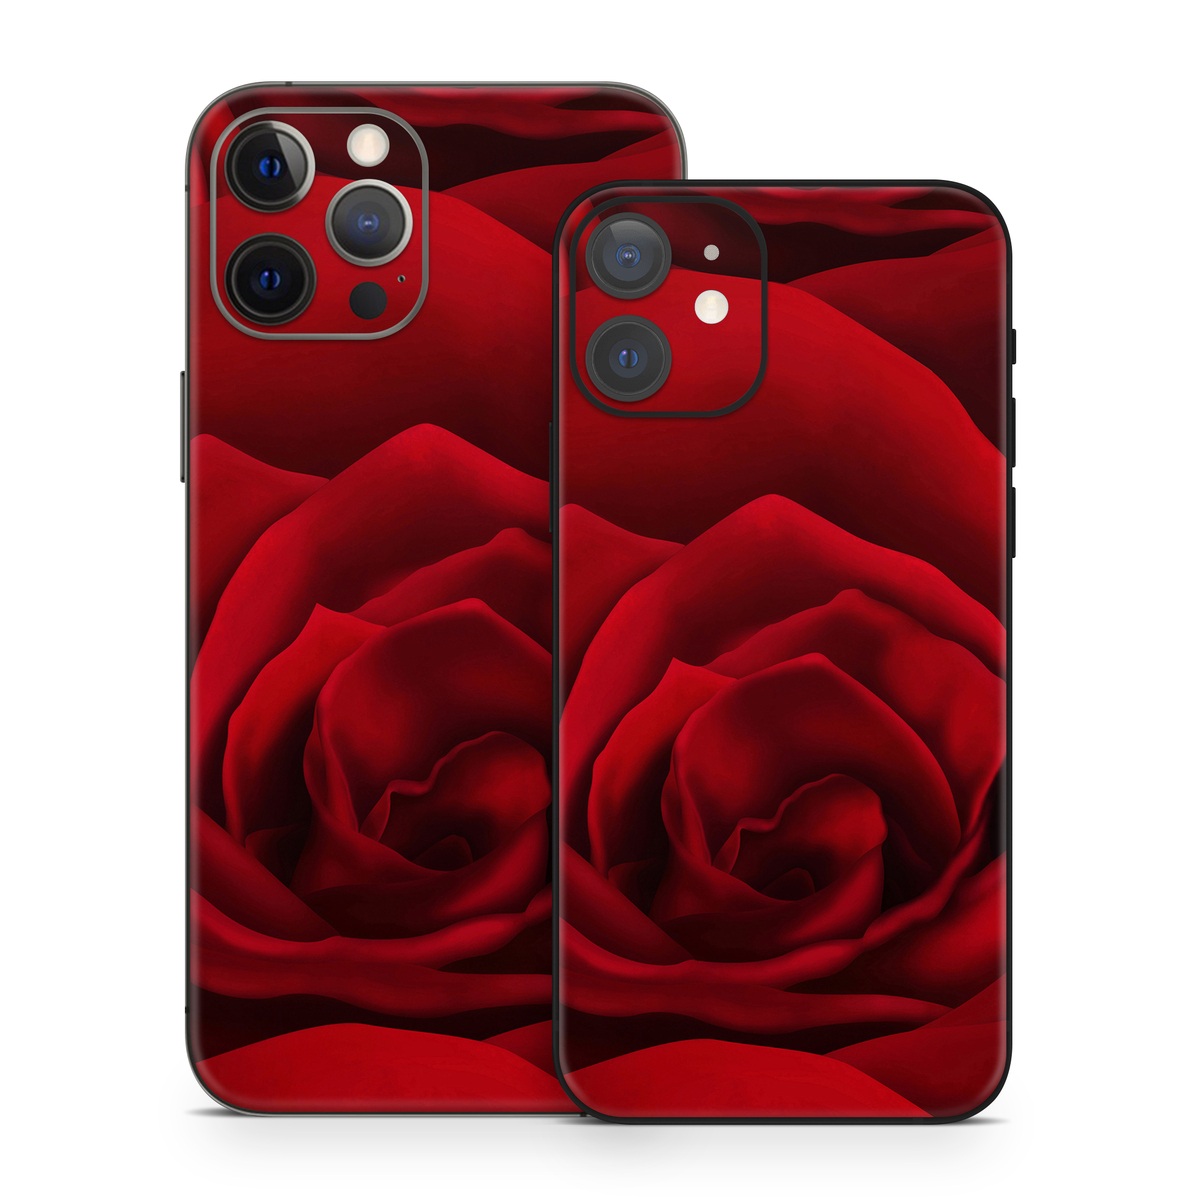 iPhone 12 Series Skin design of Red, Garden roses, Rose, Petal, Flower, Nature, Floribunda, Rose family, Close-up, Plant, with black, red colors